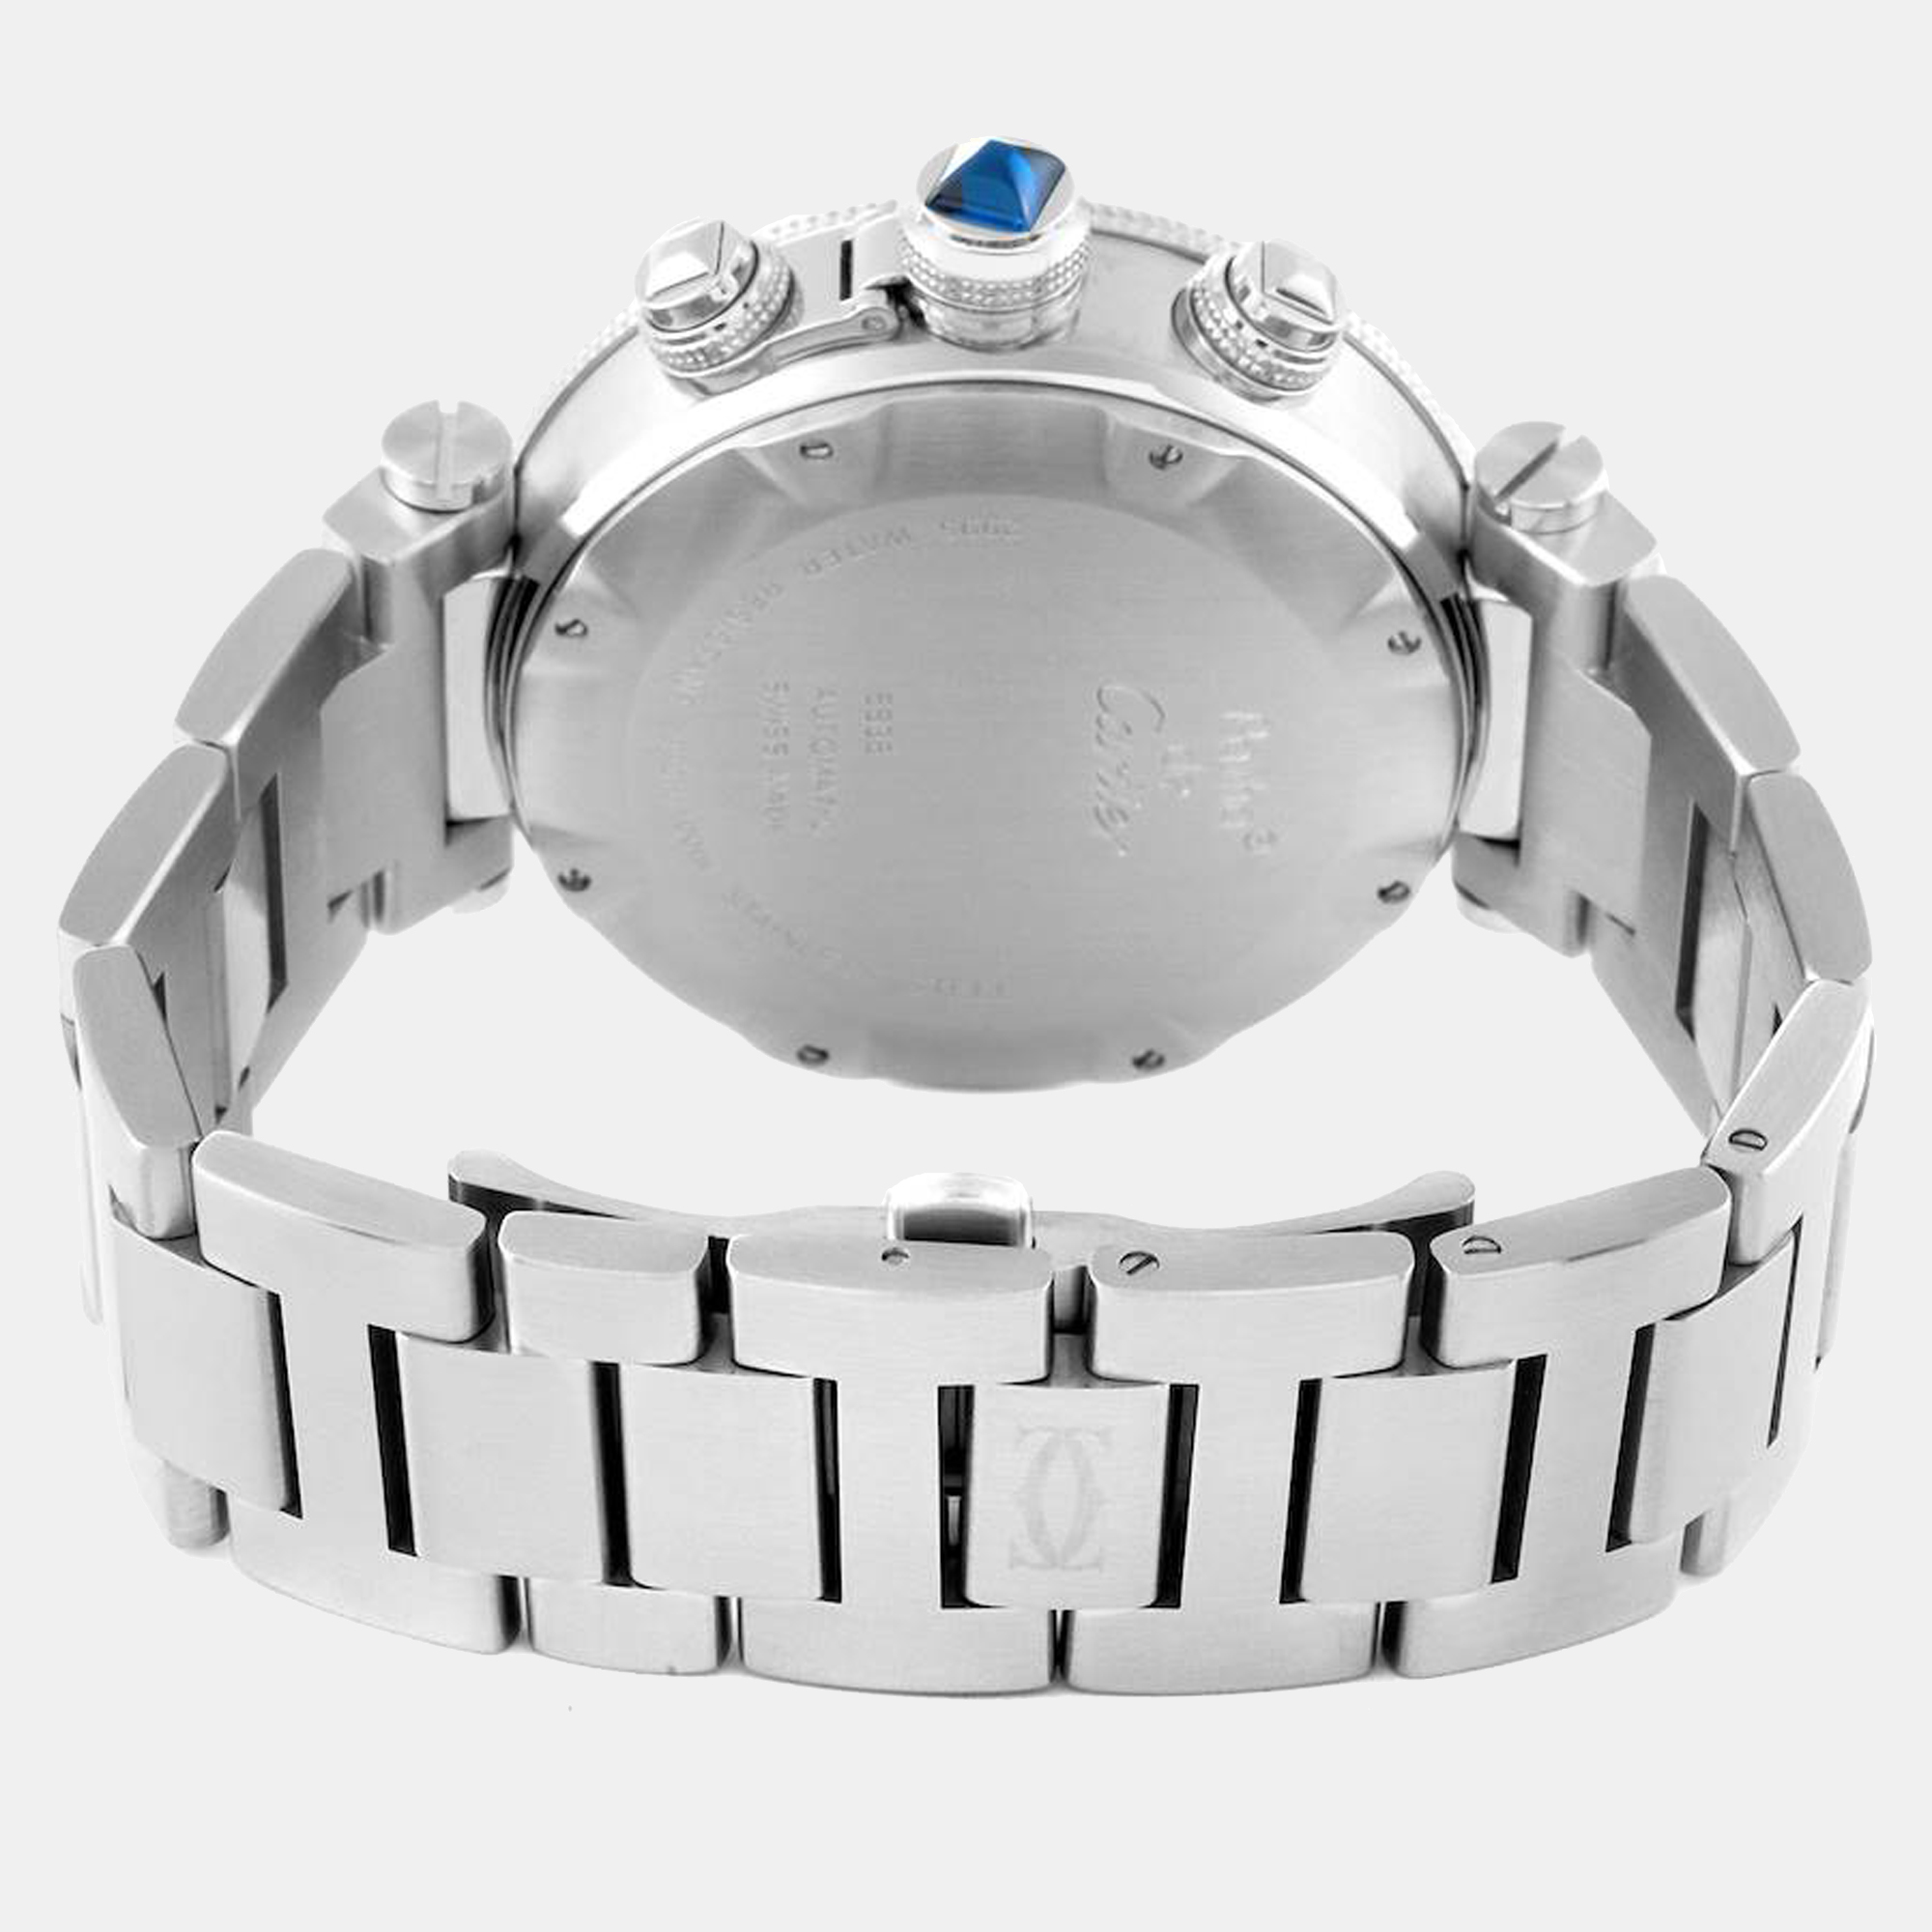 Cartier Pasha Seatimer Chronograph Steel Men's Watch W31089M7 42.5 Mm